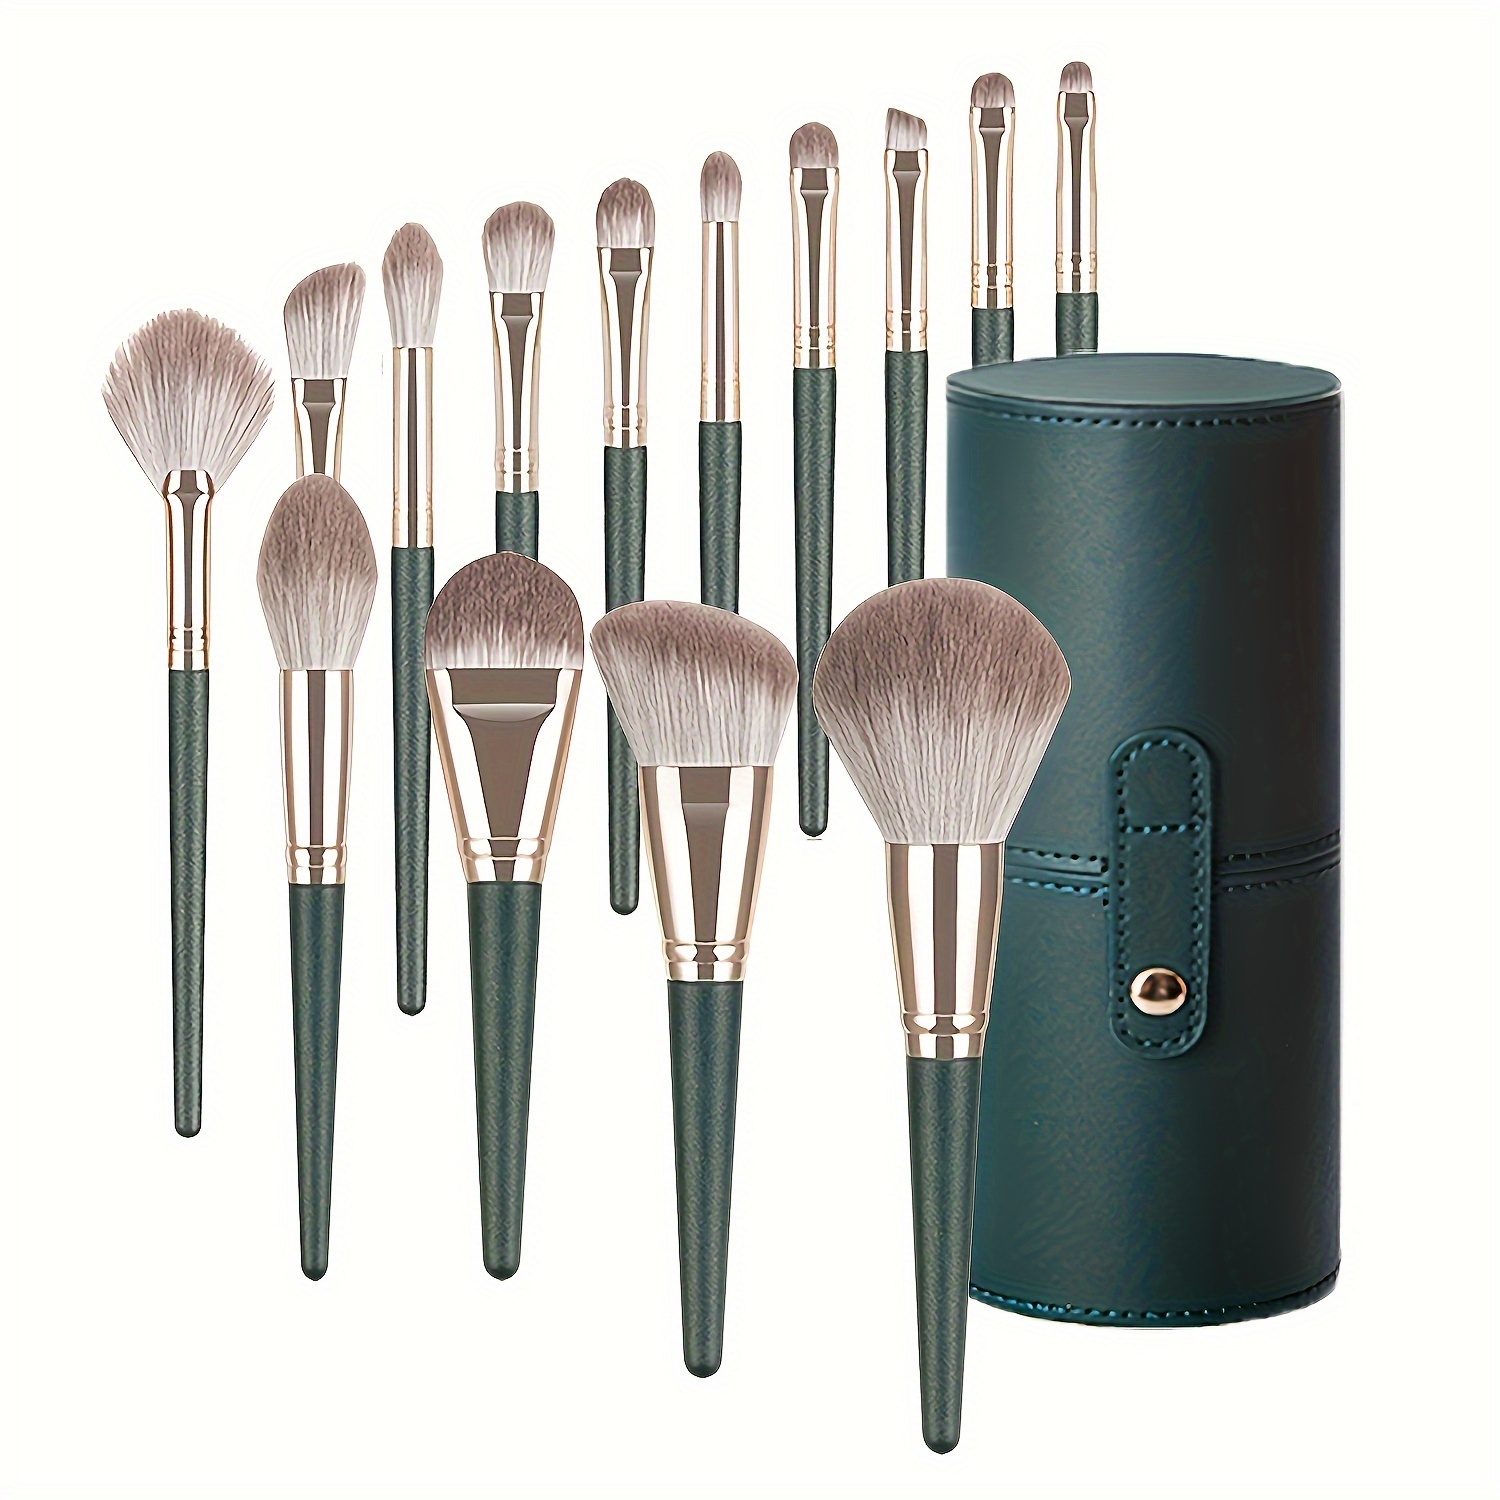 

Luxurious 14pc Makeup Brush Set - Plush, Green Professional Brushes For Full Face & Eye Detailing - Ideal For Foundation, Contouring & Blending